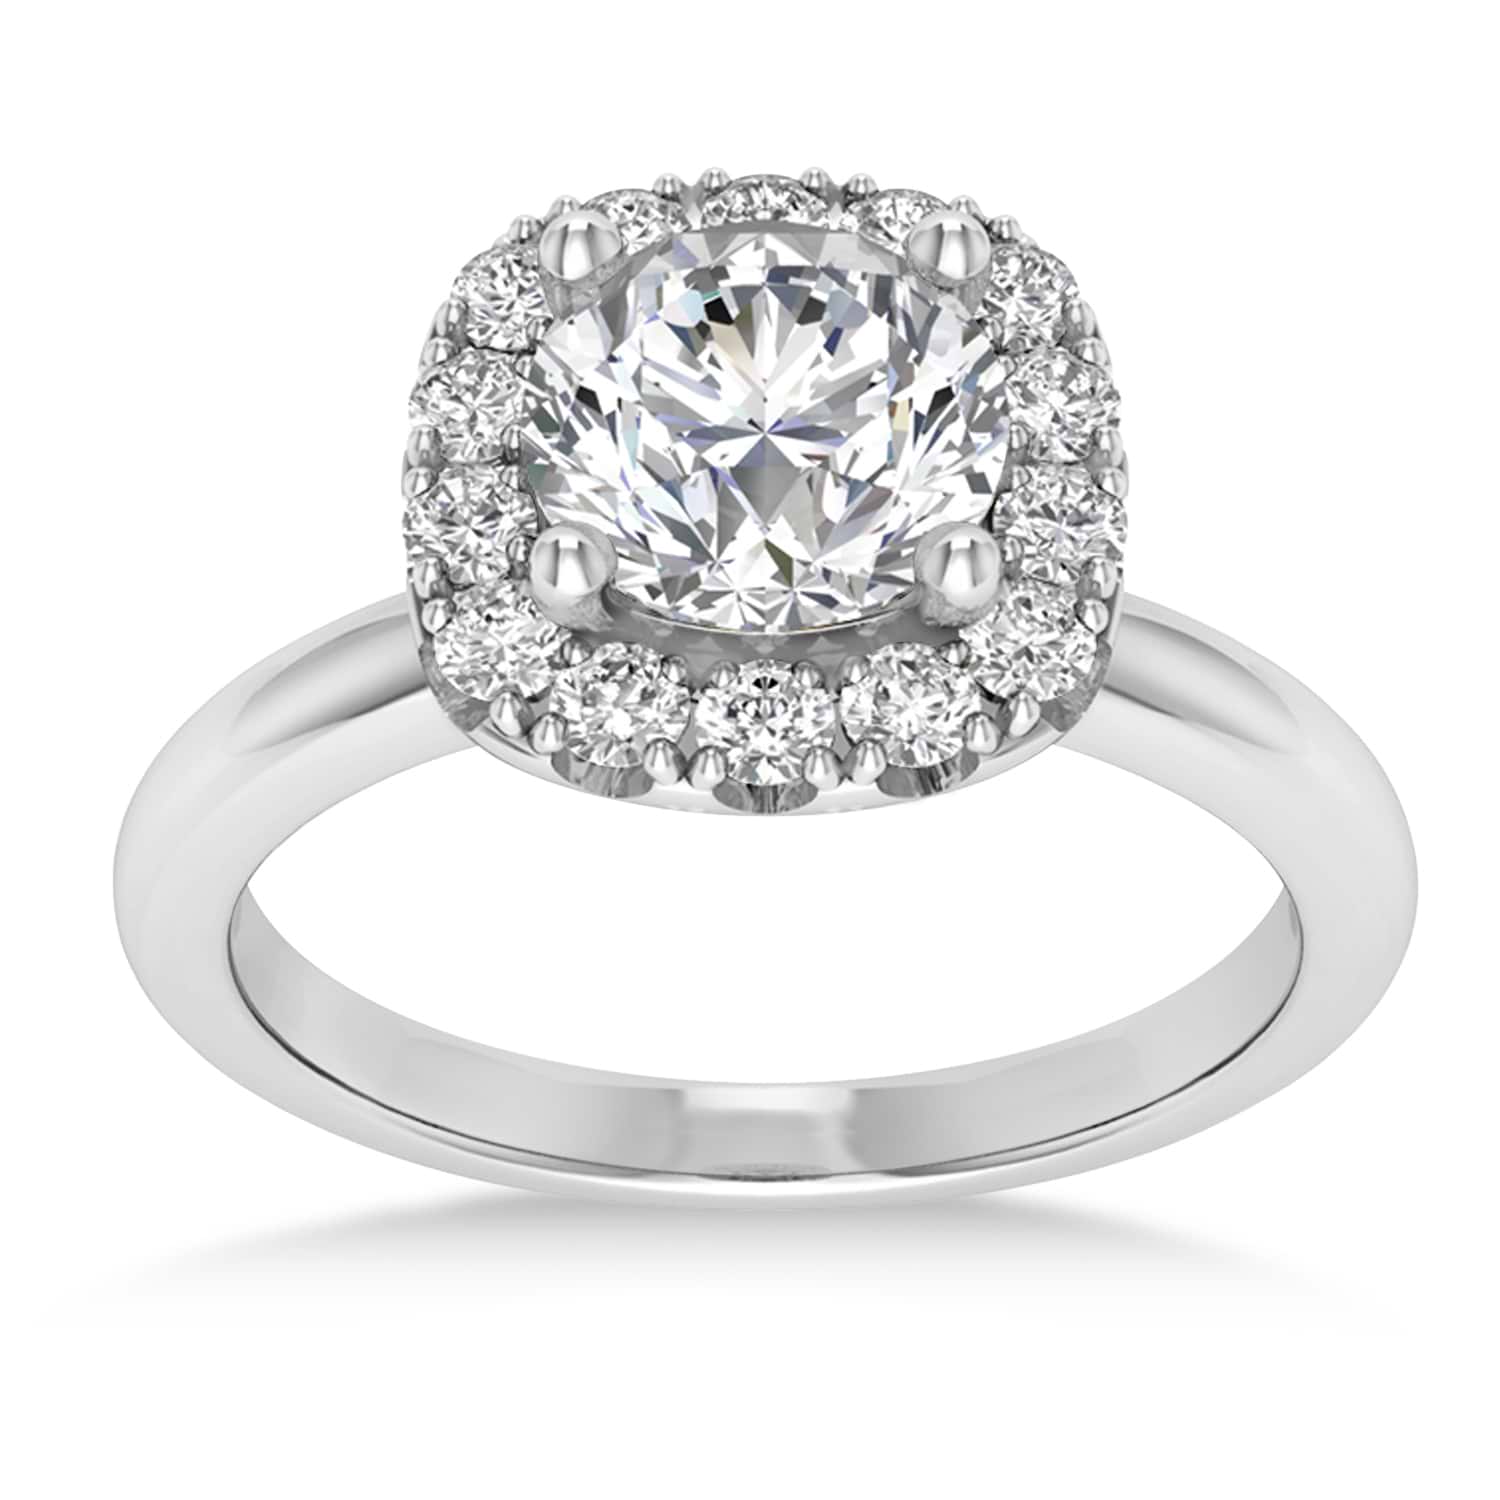 Diamond Cathedral Engagement Ring Palladium (0.29ct)